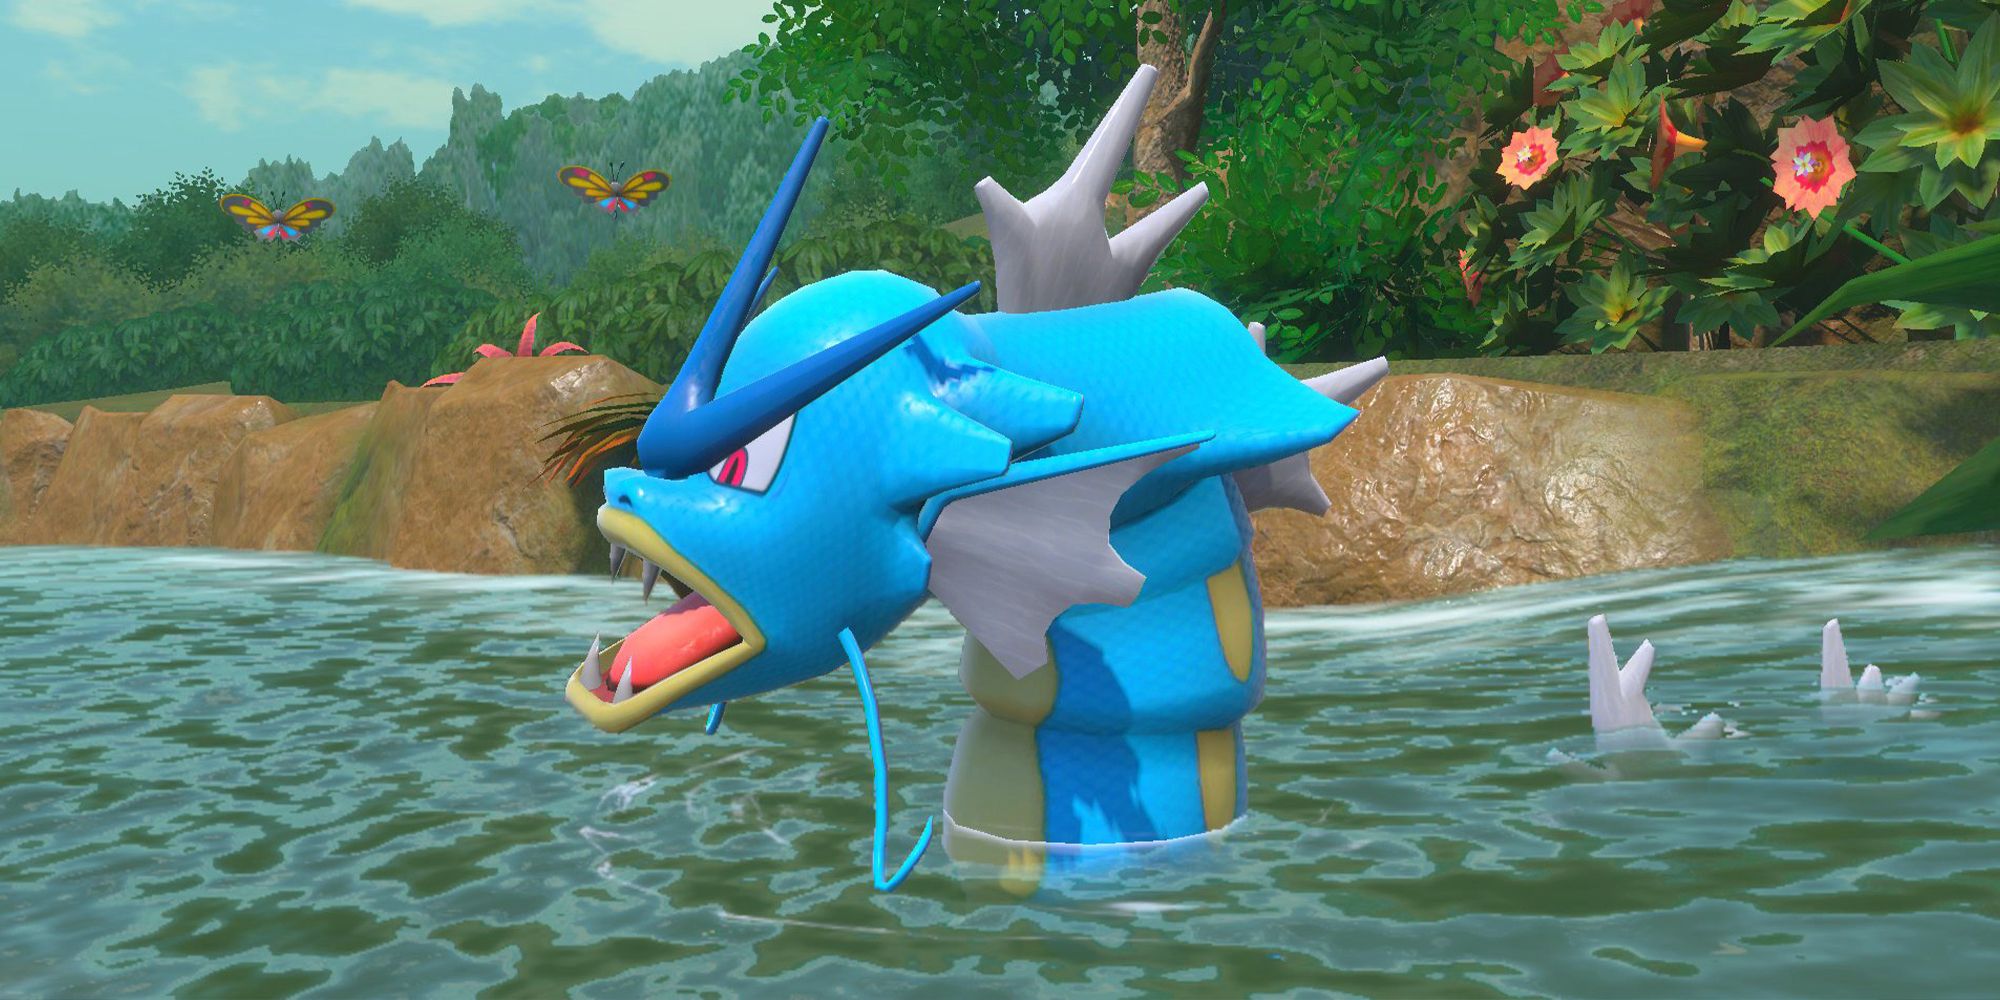 Gyrados rising from a lake in New Pokemon Snap.